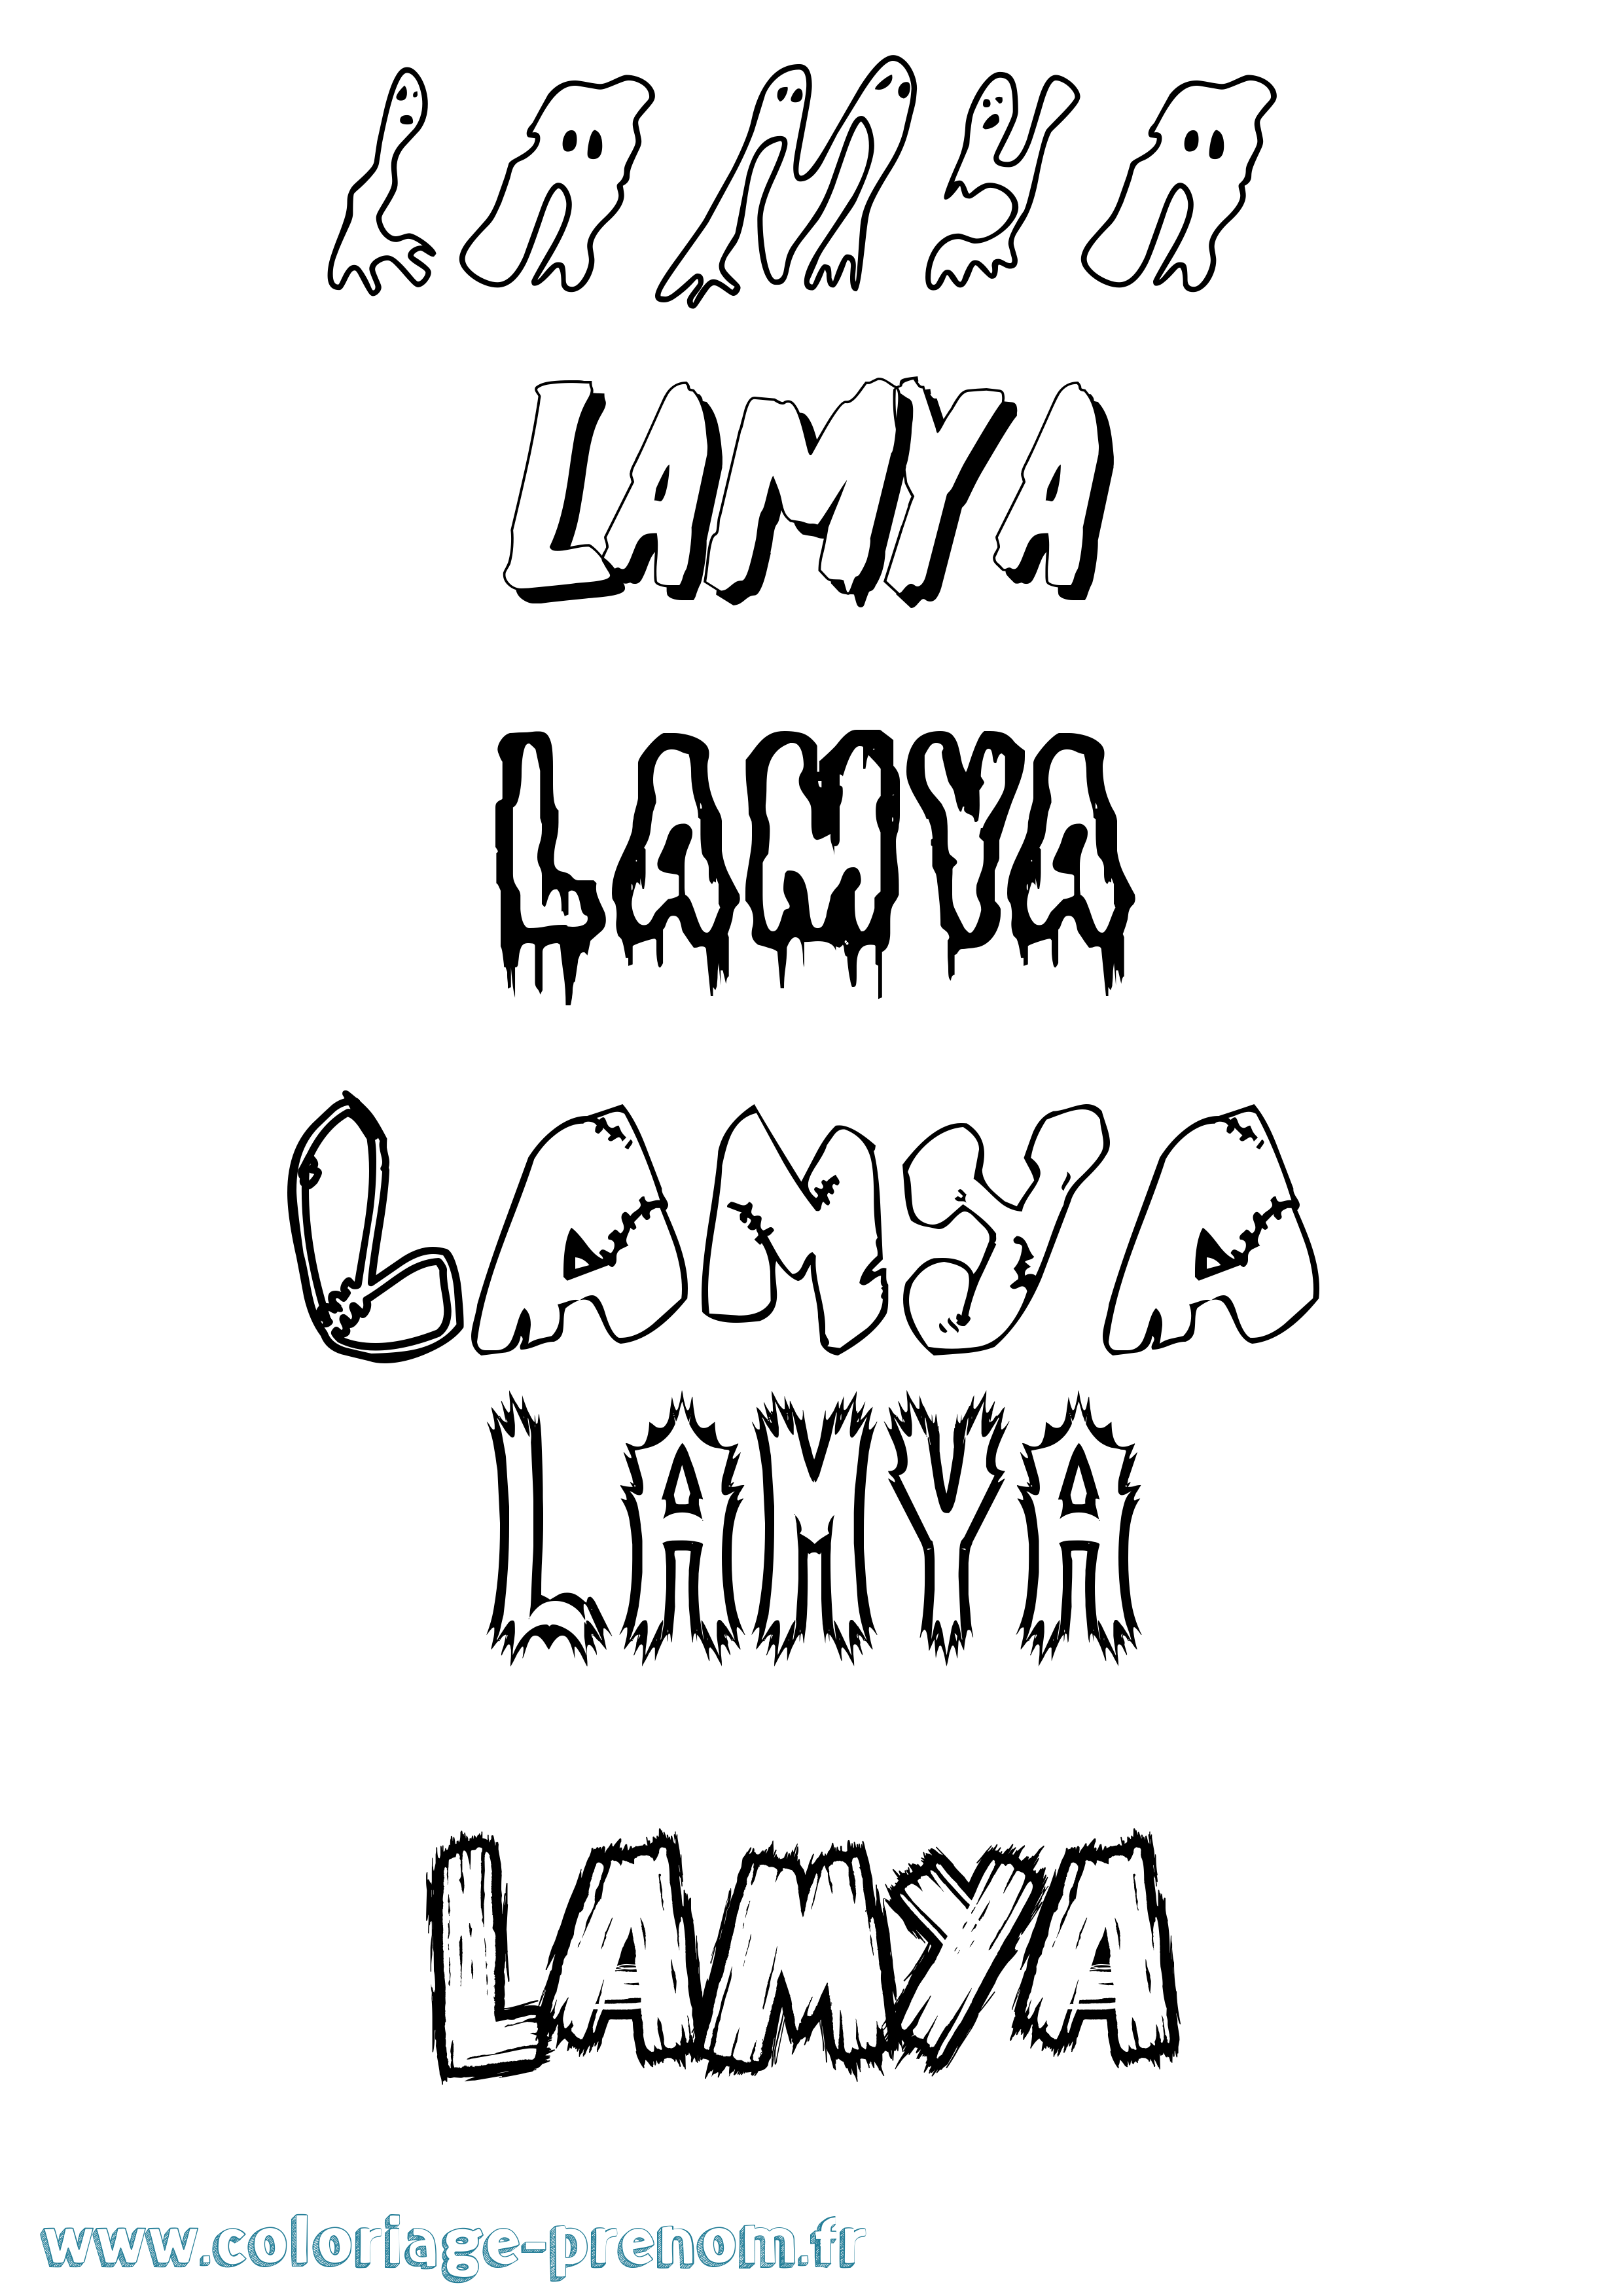 Coloriage prénom Lamya Frisson